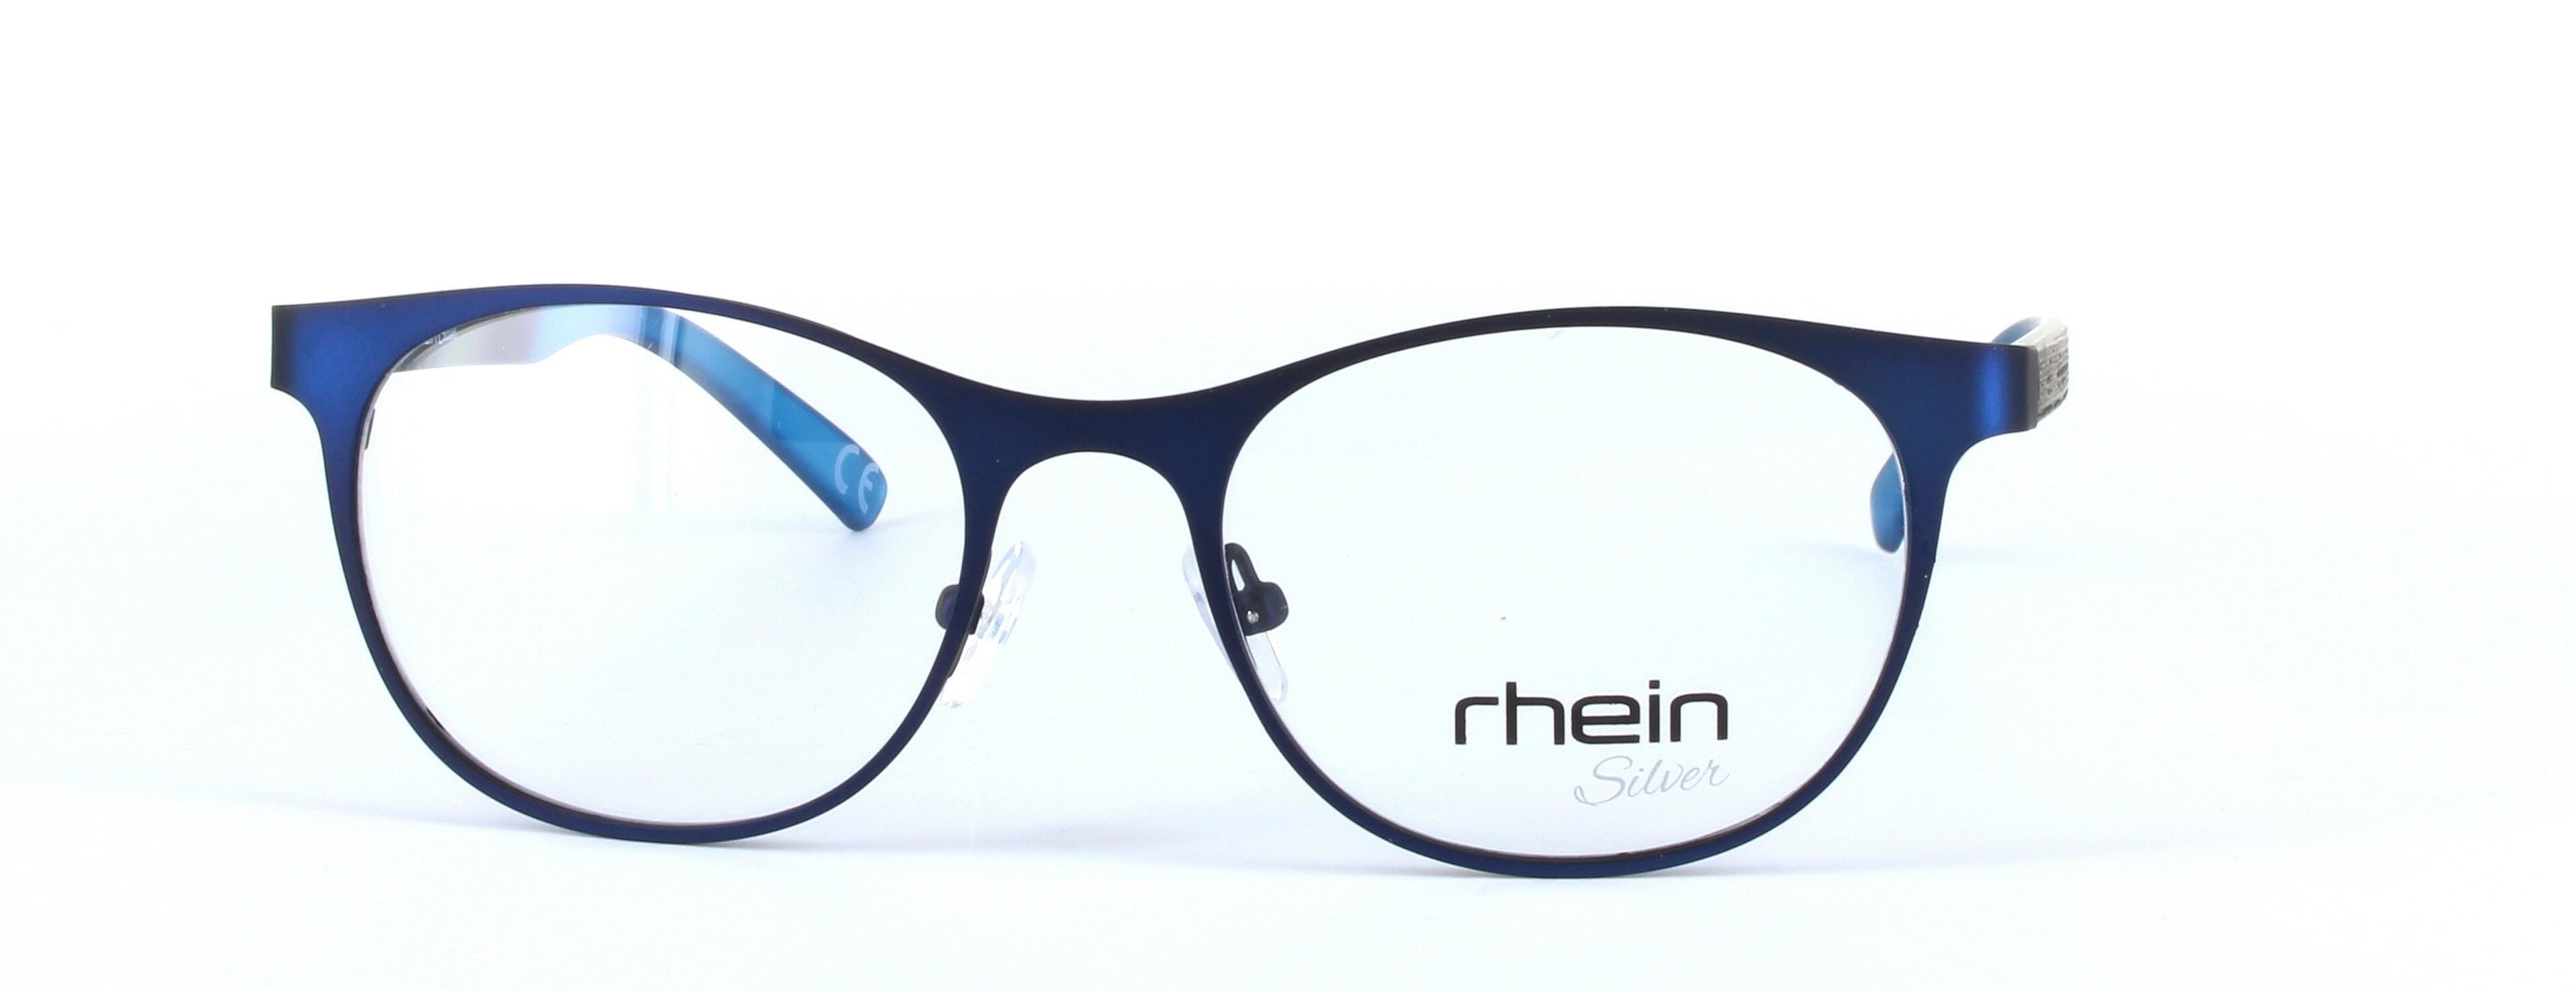 Isra Blue Full Rim Round Metal Glasses - Image View 5